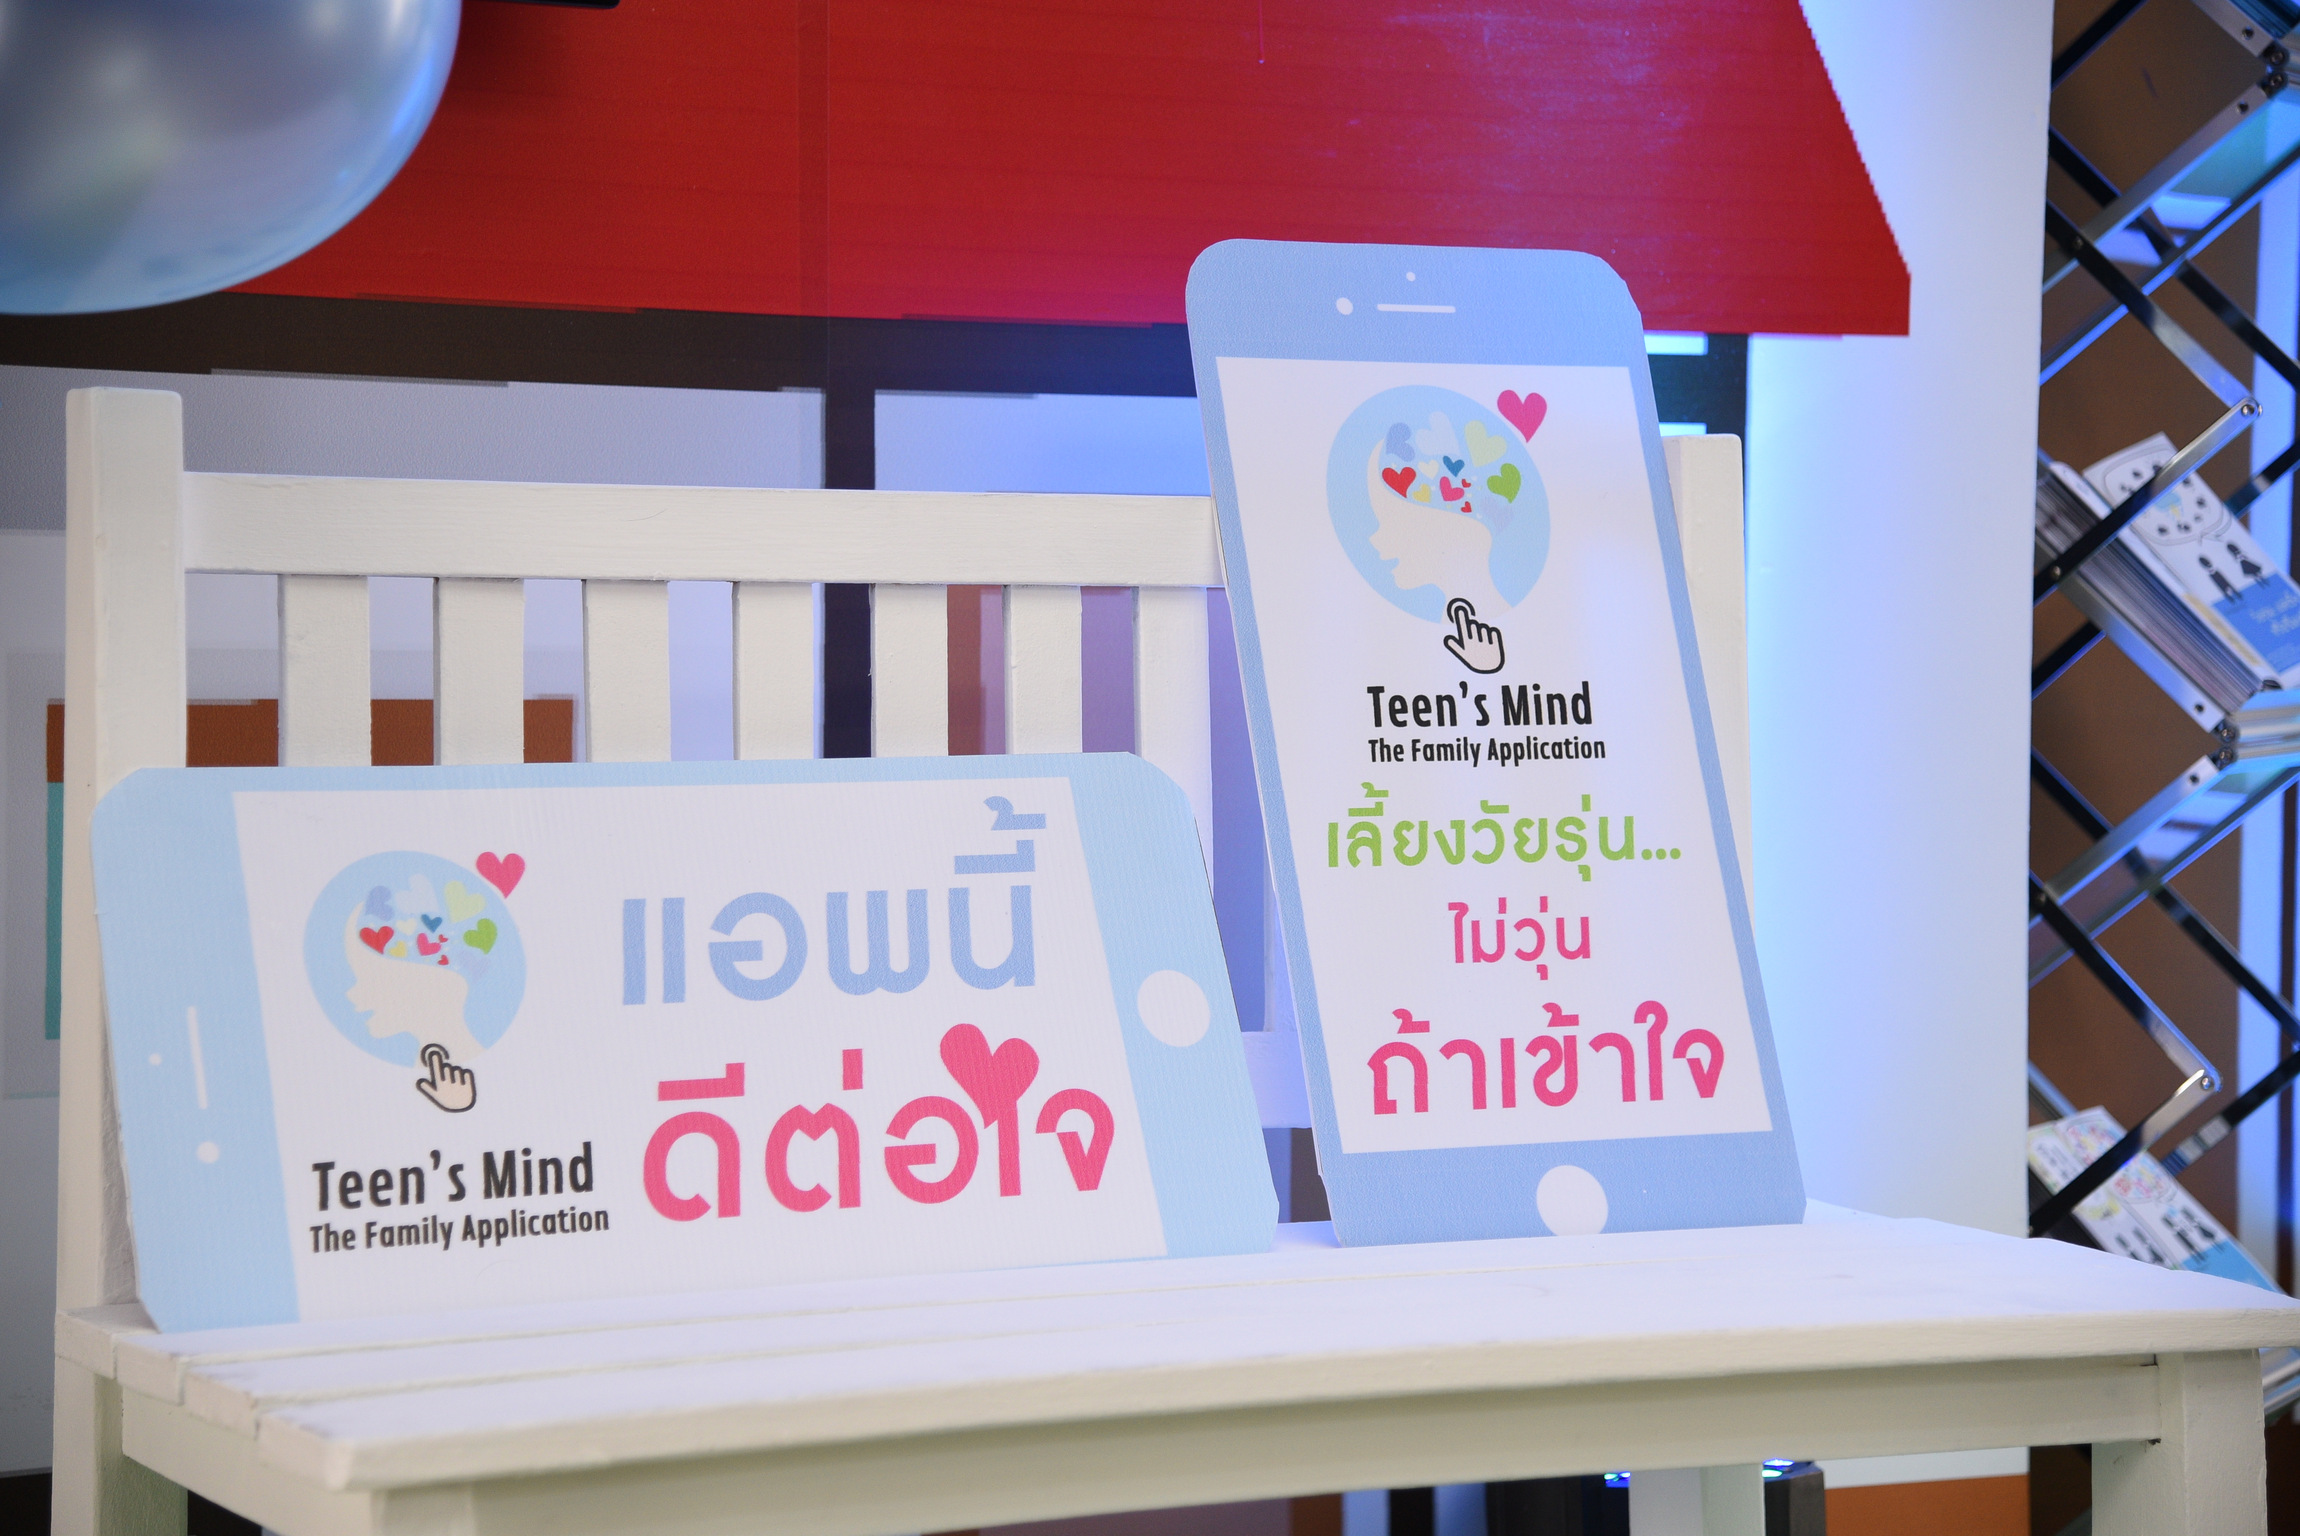 'TEEN'S MIND' แอพเลี้ยงลูกวัยรุ่นป้องกัน 'ท้องไม่พร้อม' thaihealth